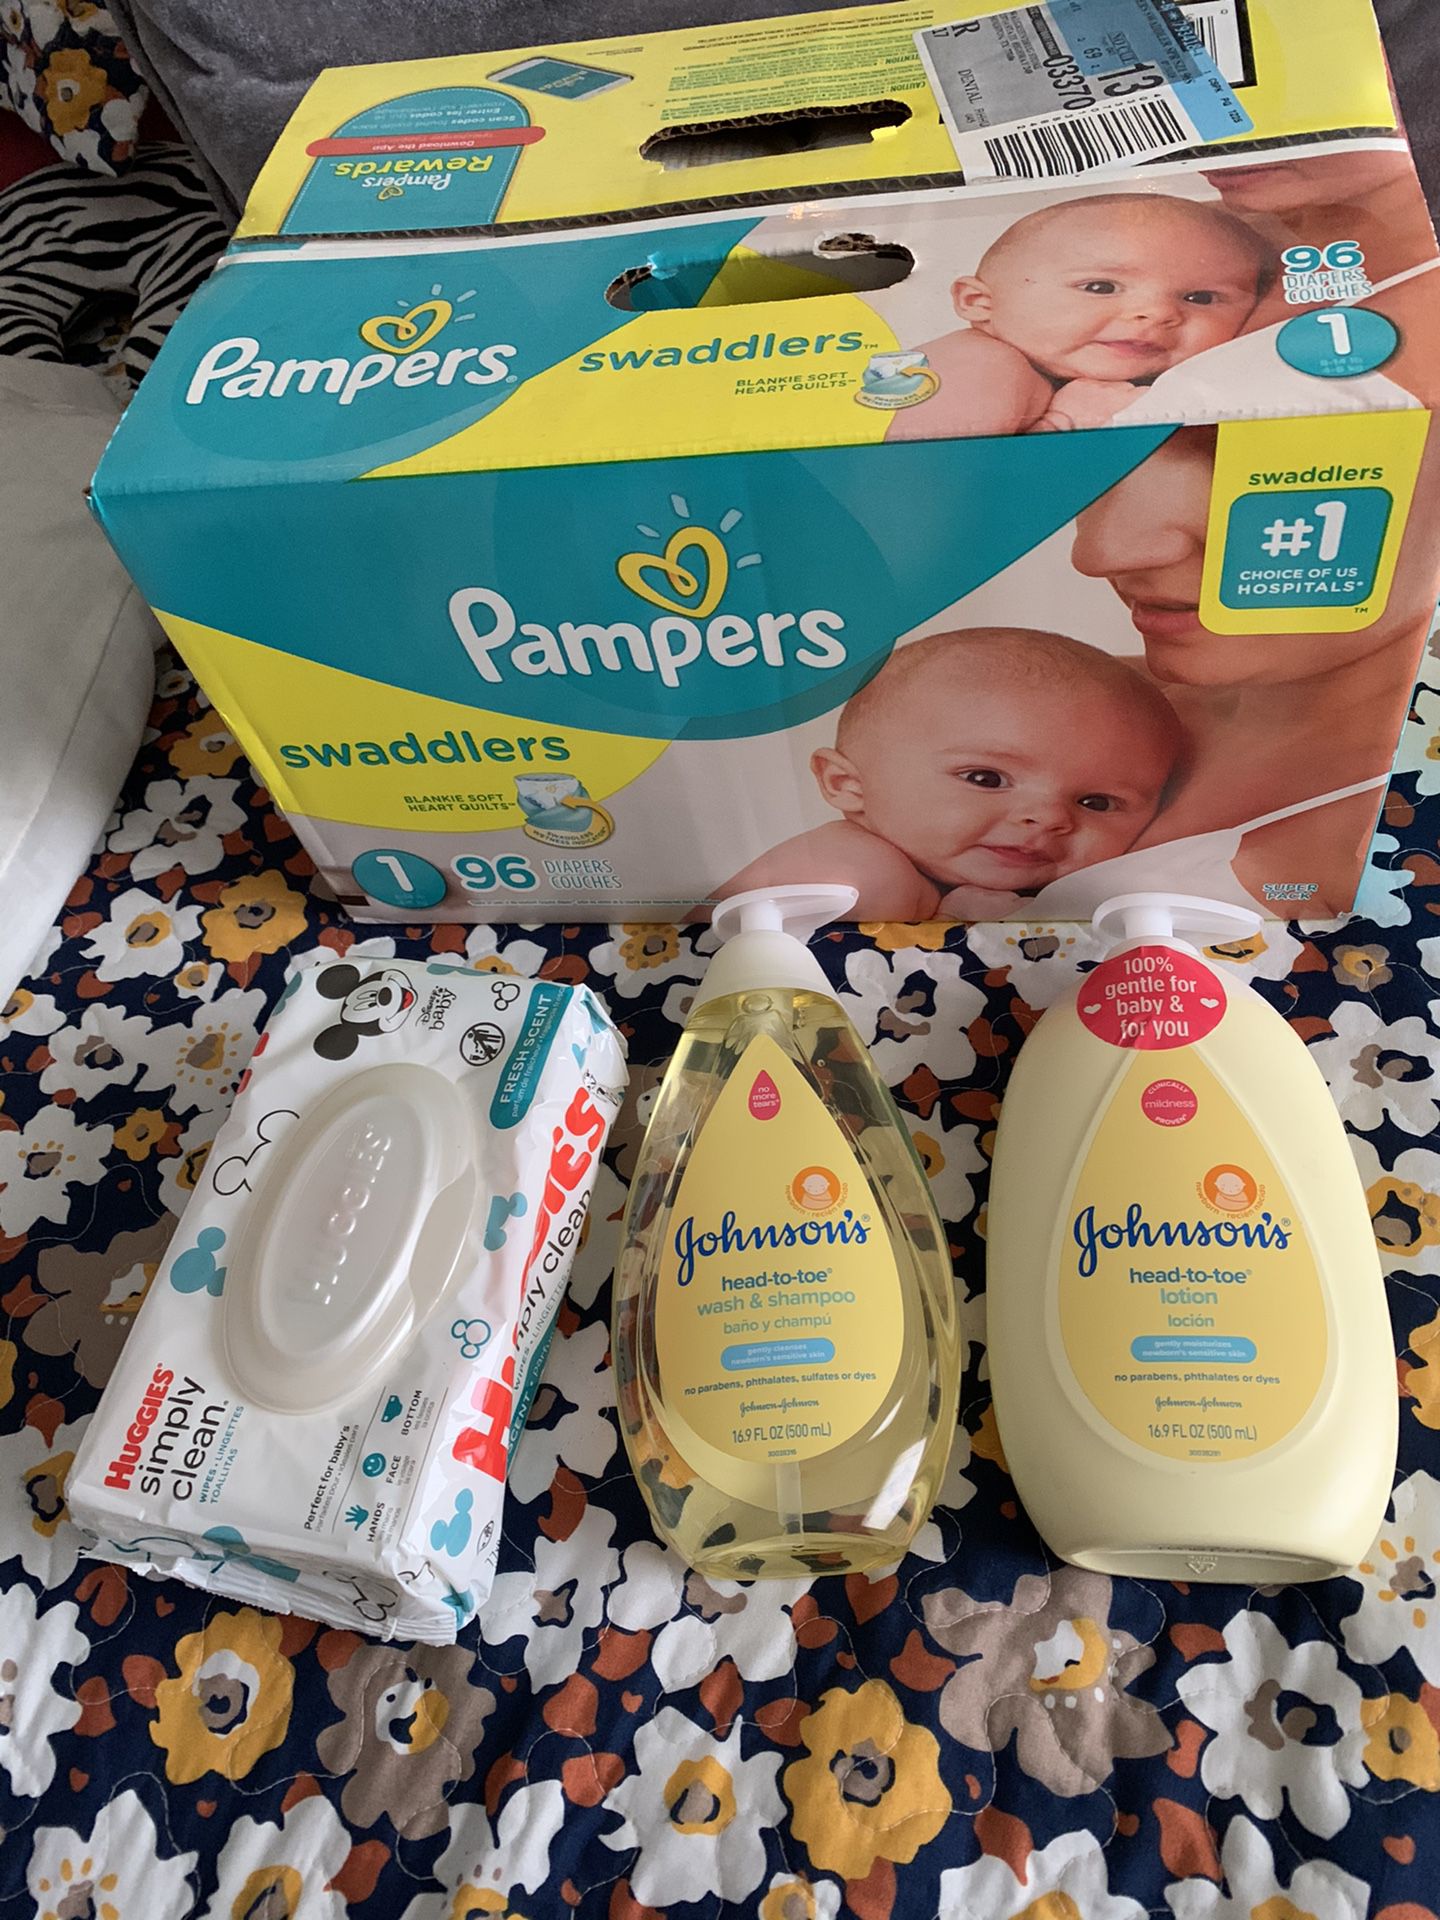 Caja de pampers ,wipes,shampo y crema para bebe,set welcome baby diapers